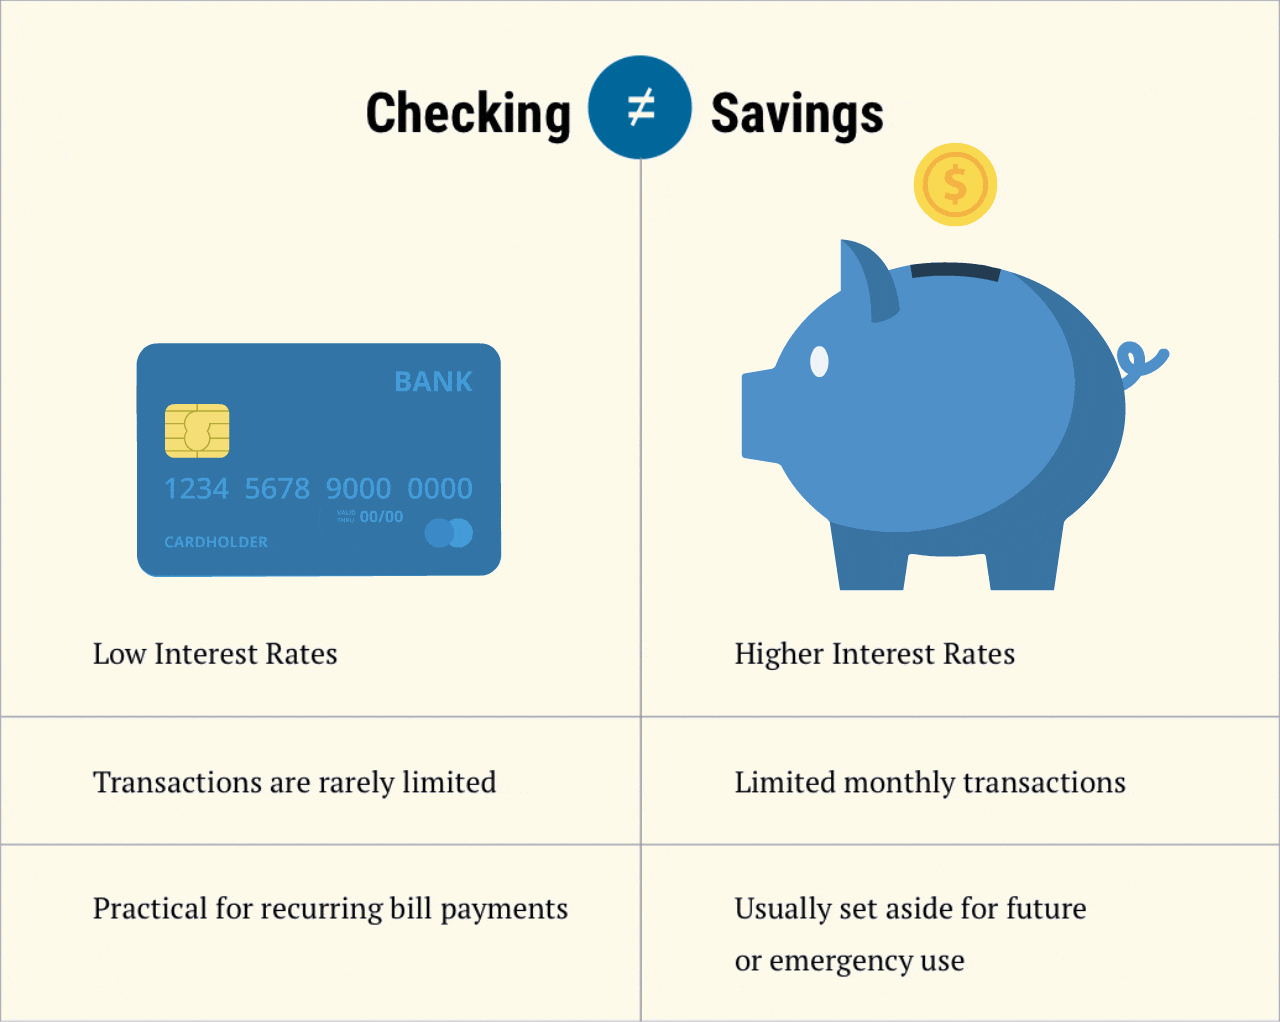 Checking Account vs Savings Account